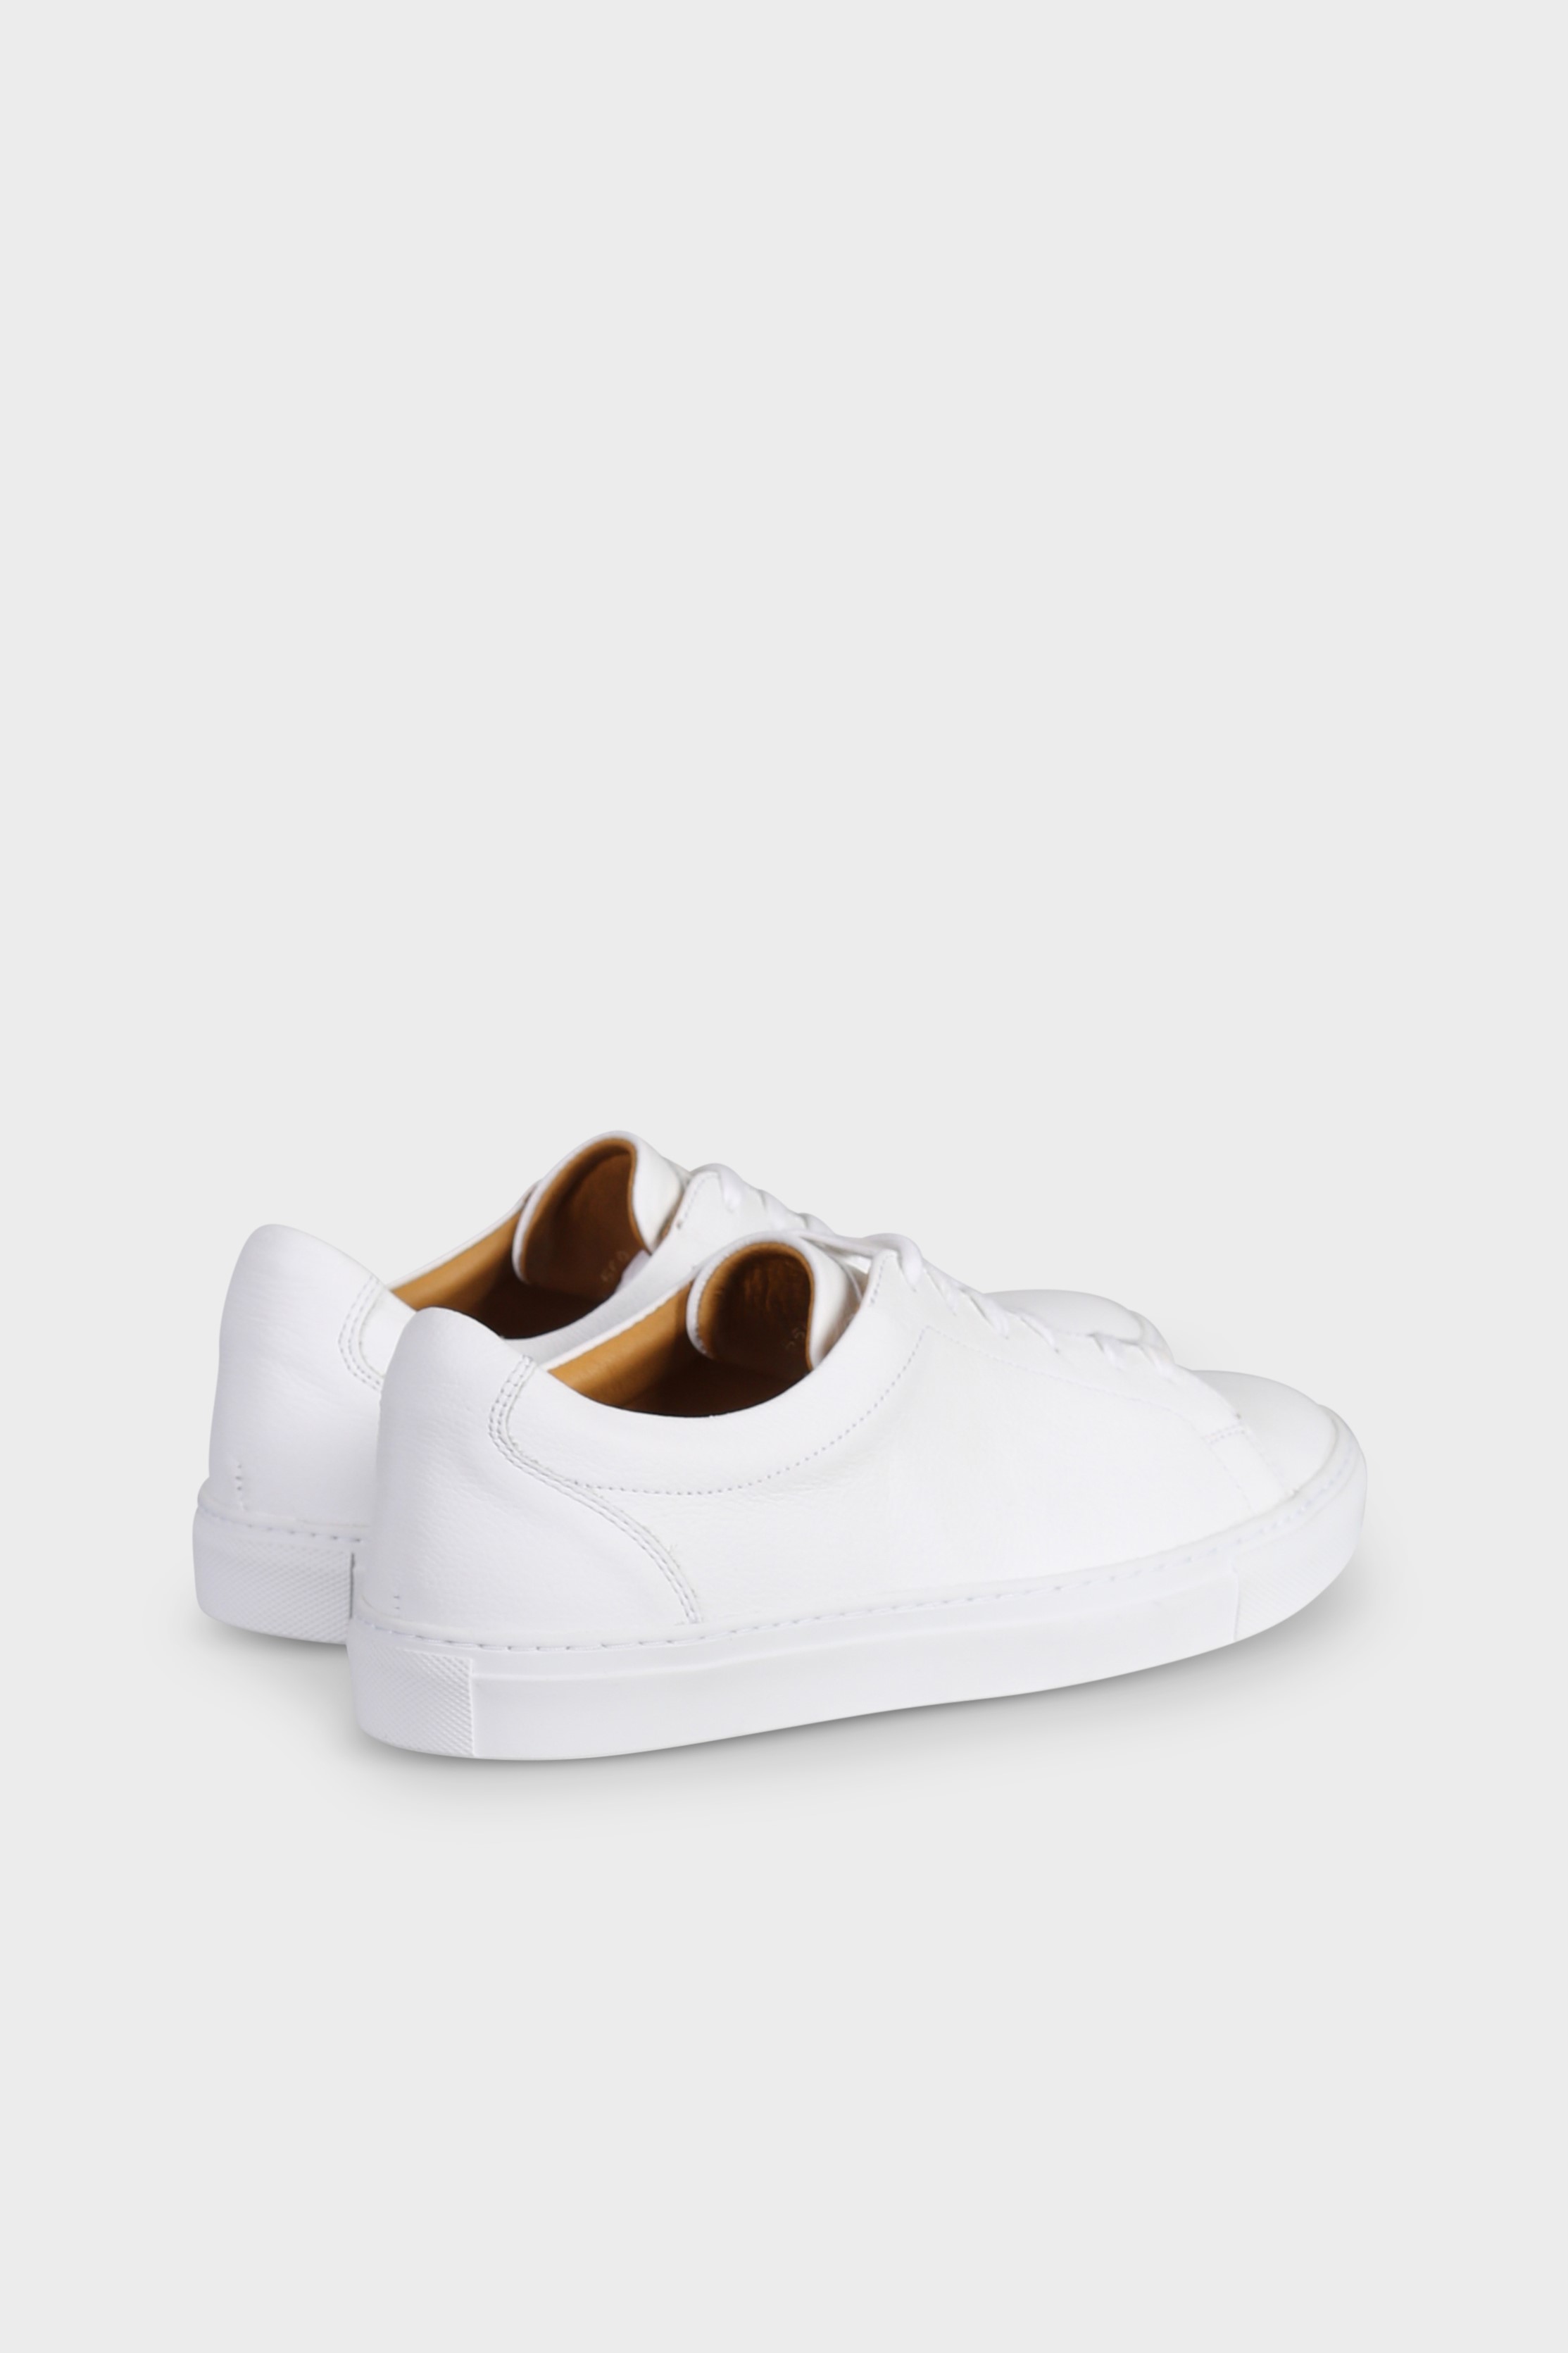 LUDWIG REITER Tennis Sneaker in White 44